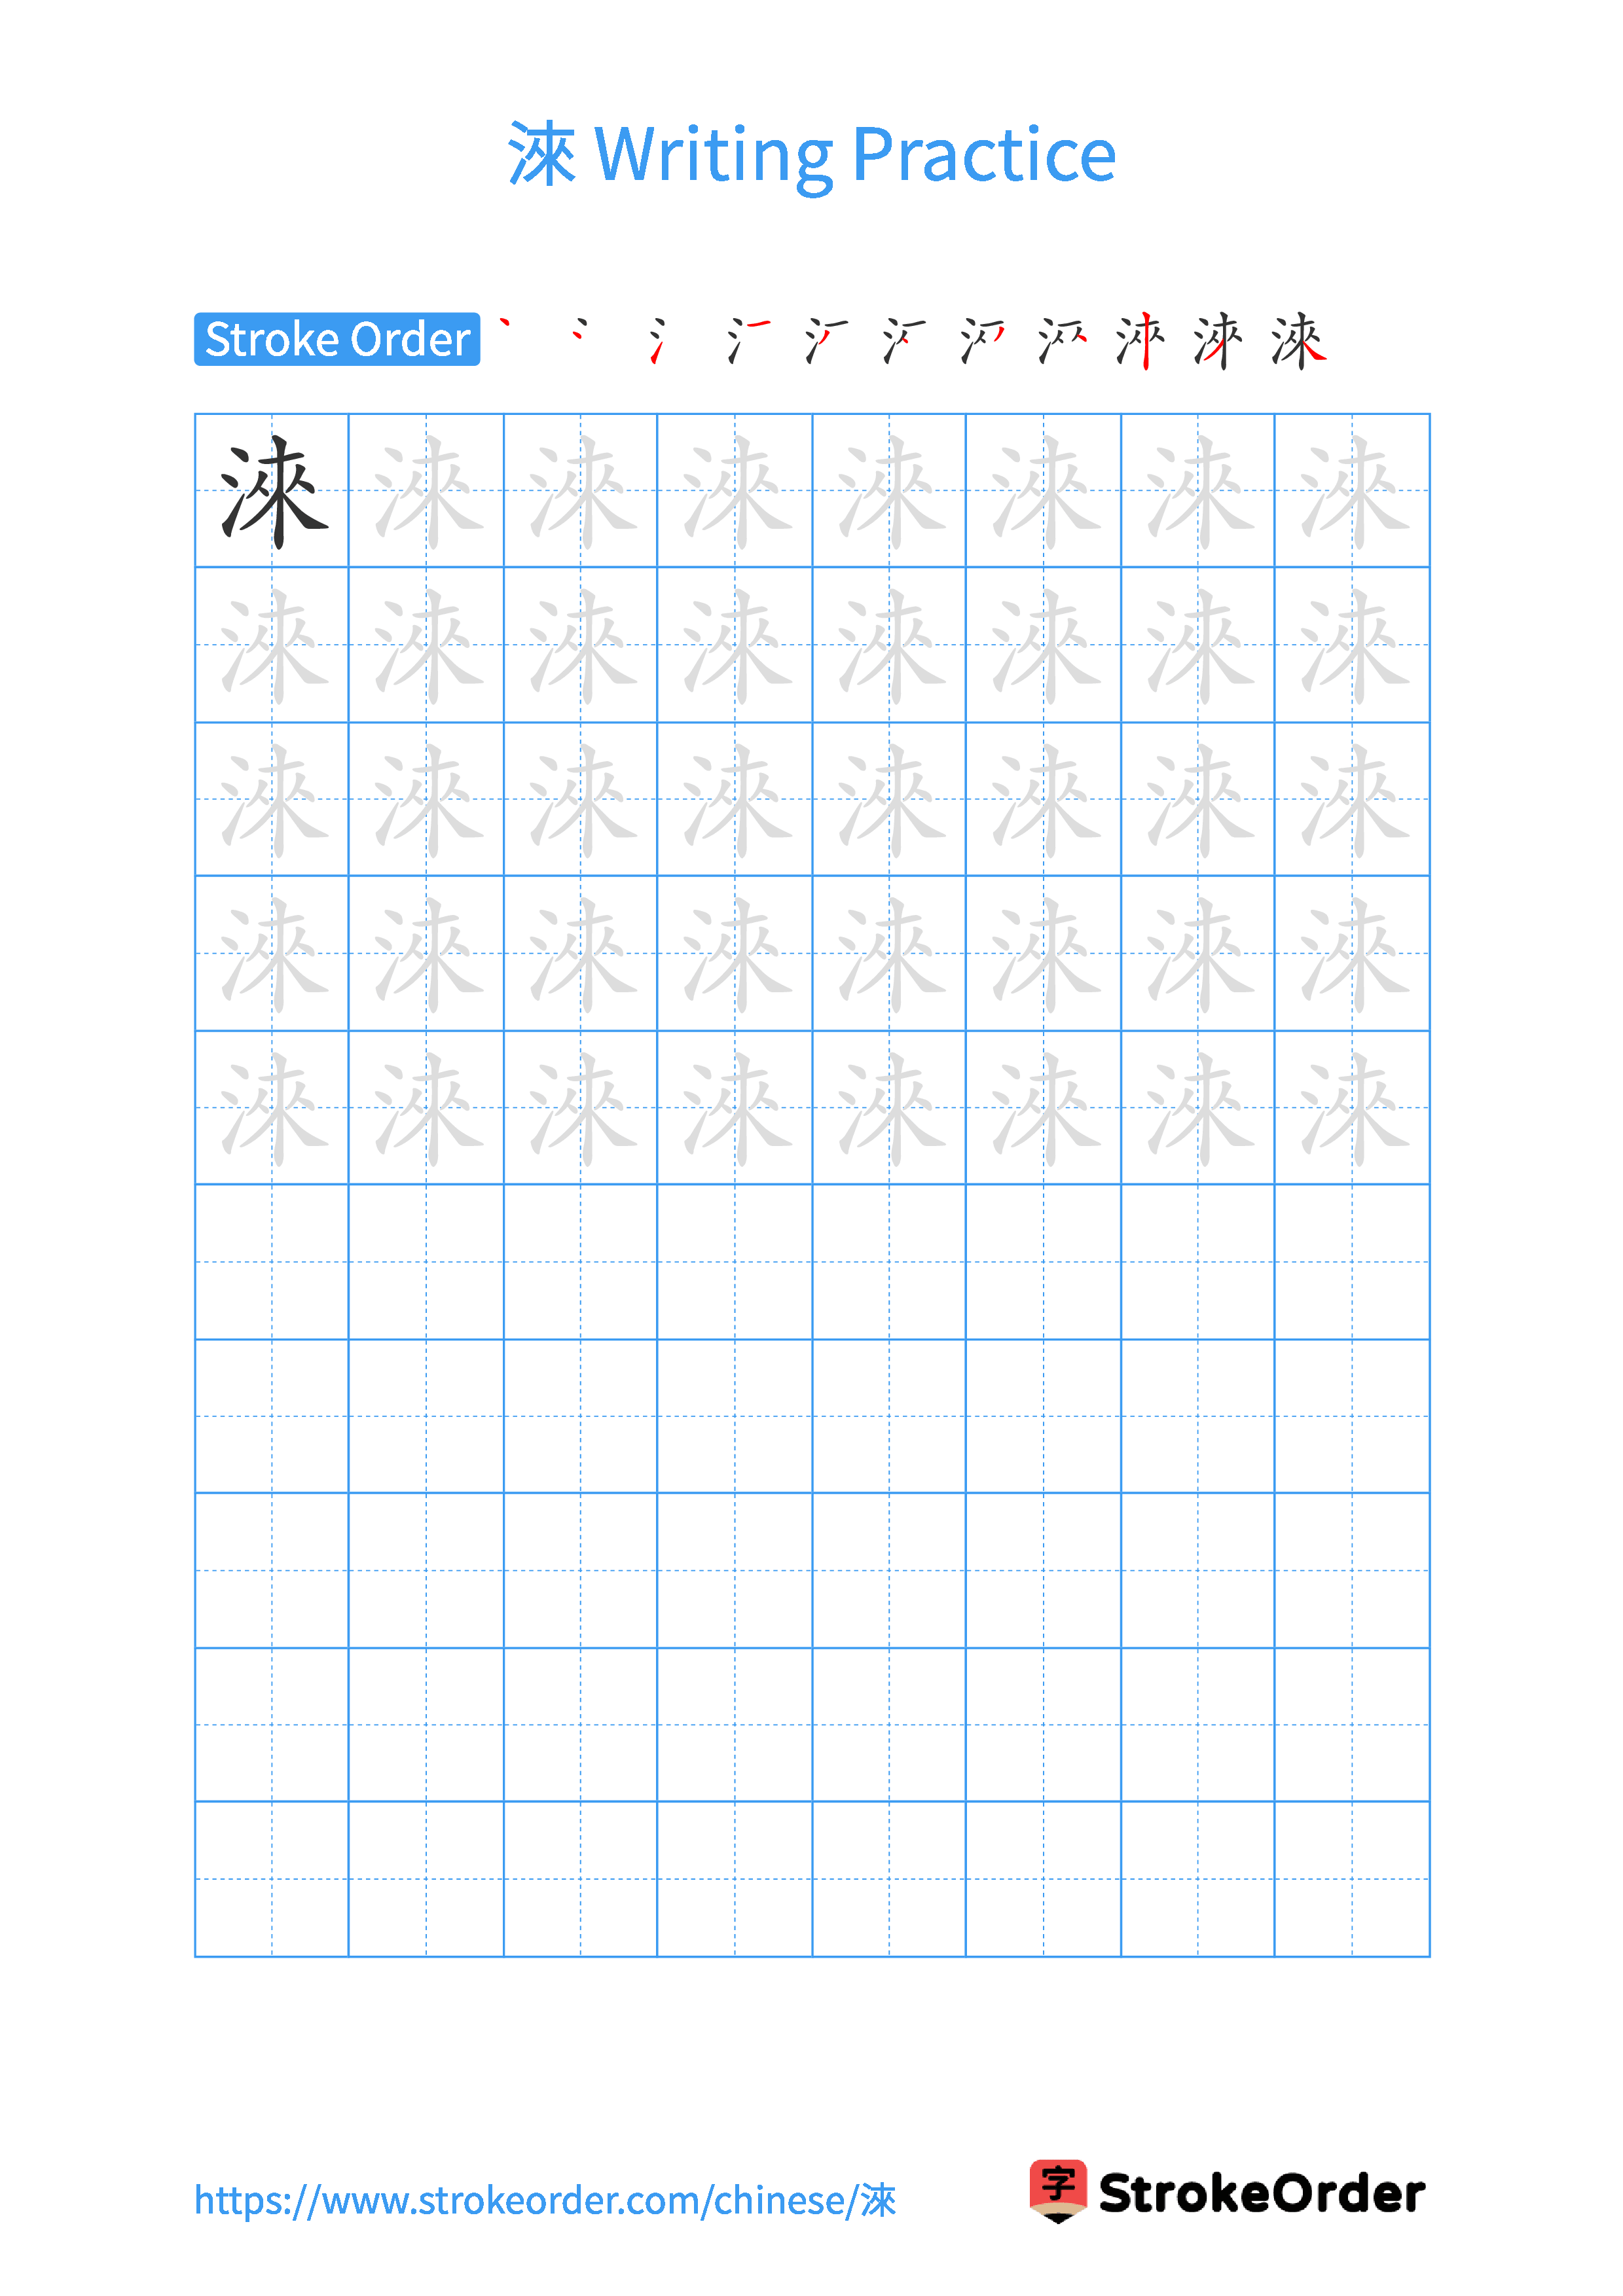 Printable Handwriting Practice Worksheet of the Chinese character 淶 in Portrait Orientation (Tian Zi Ge)